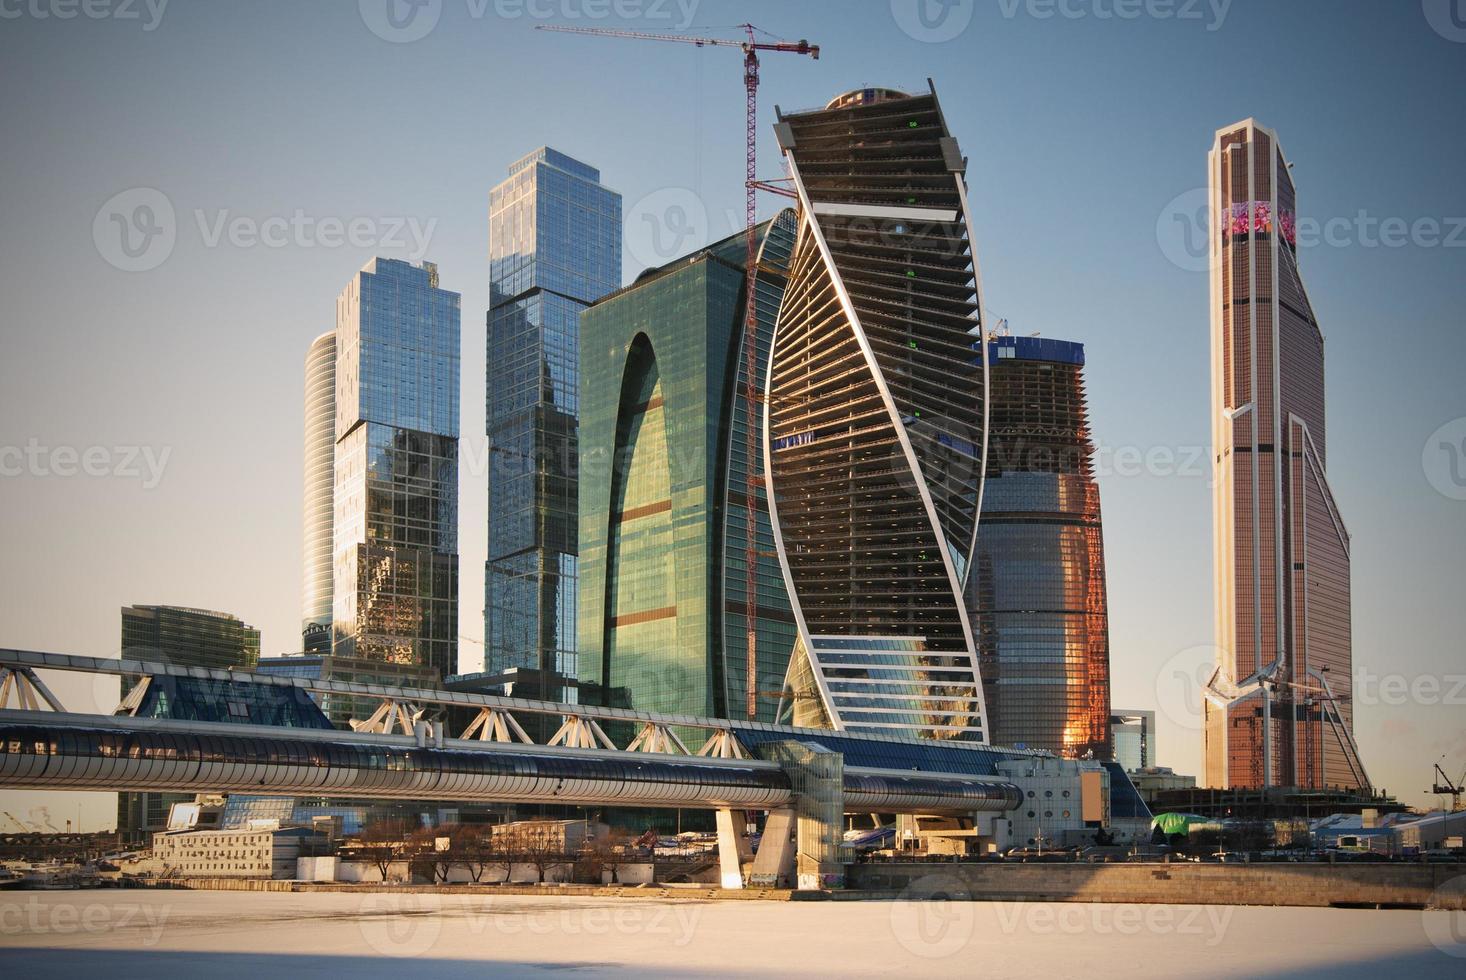 Moskou City Business Center in de winter foto